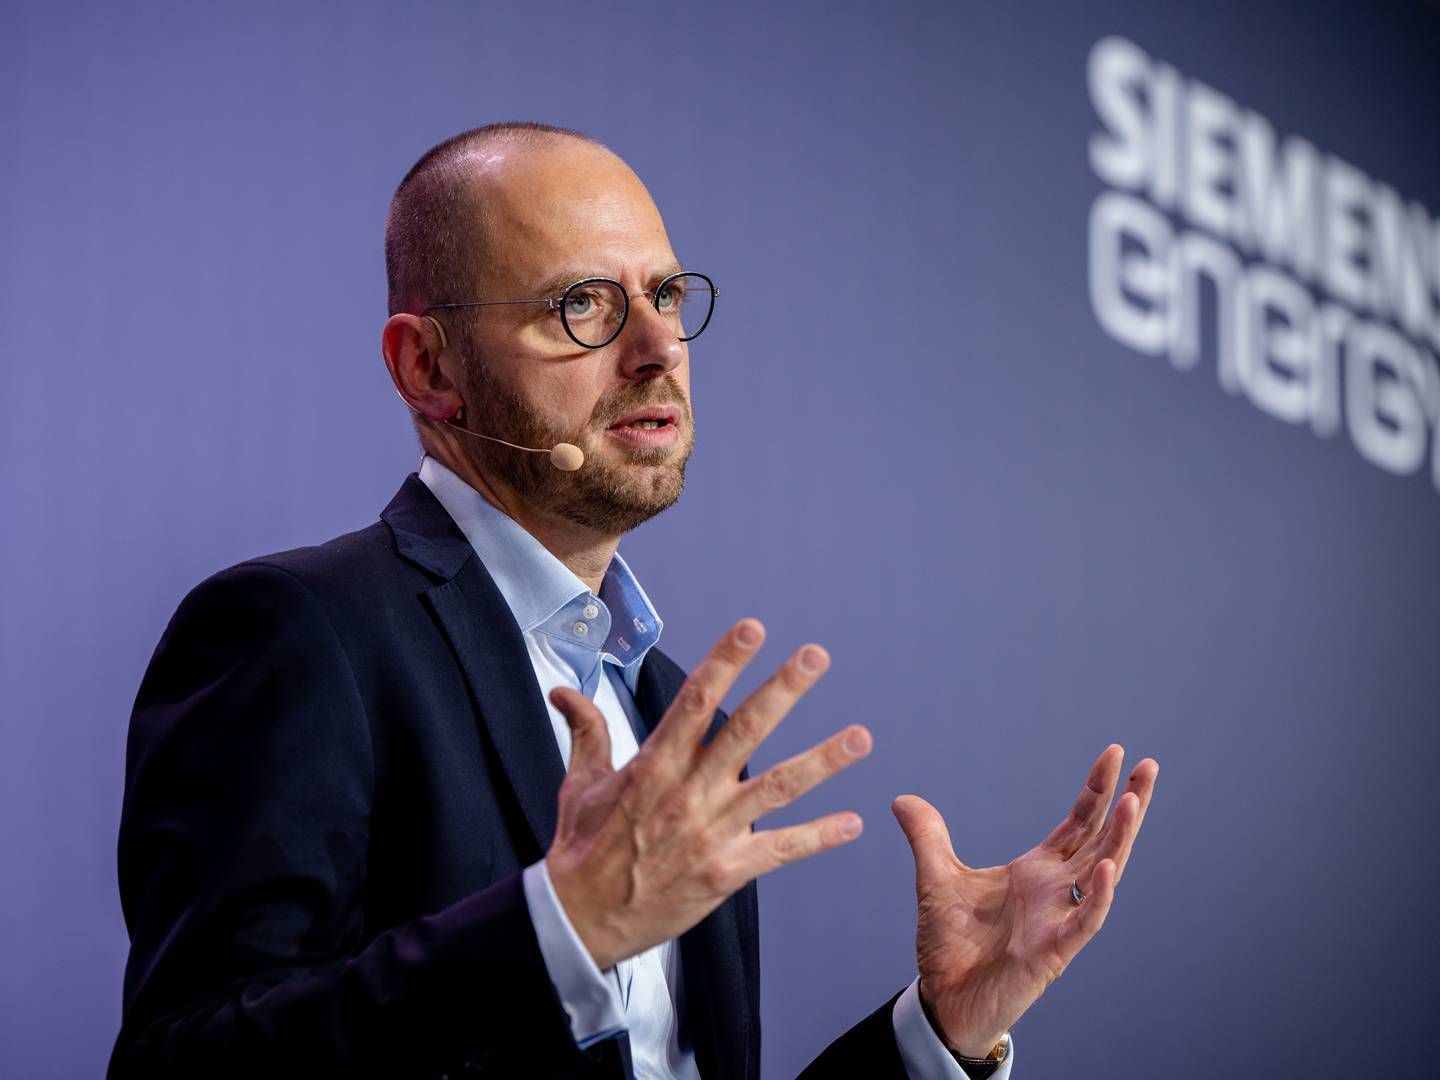 Progress is already apparent at Siemens Gamesa, says Siemens Energy's CEO, Christian Bruch. But profitability is still a ways off. | Photo: Siemens Energy